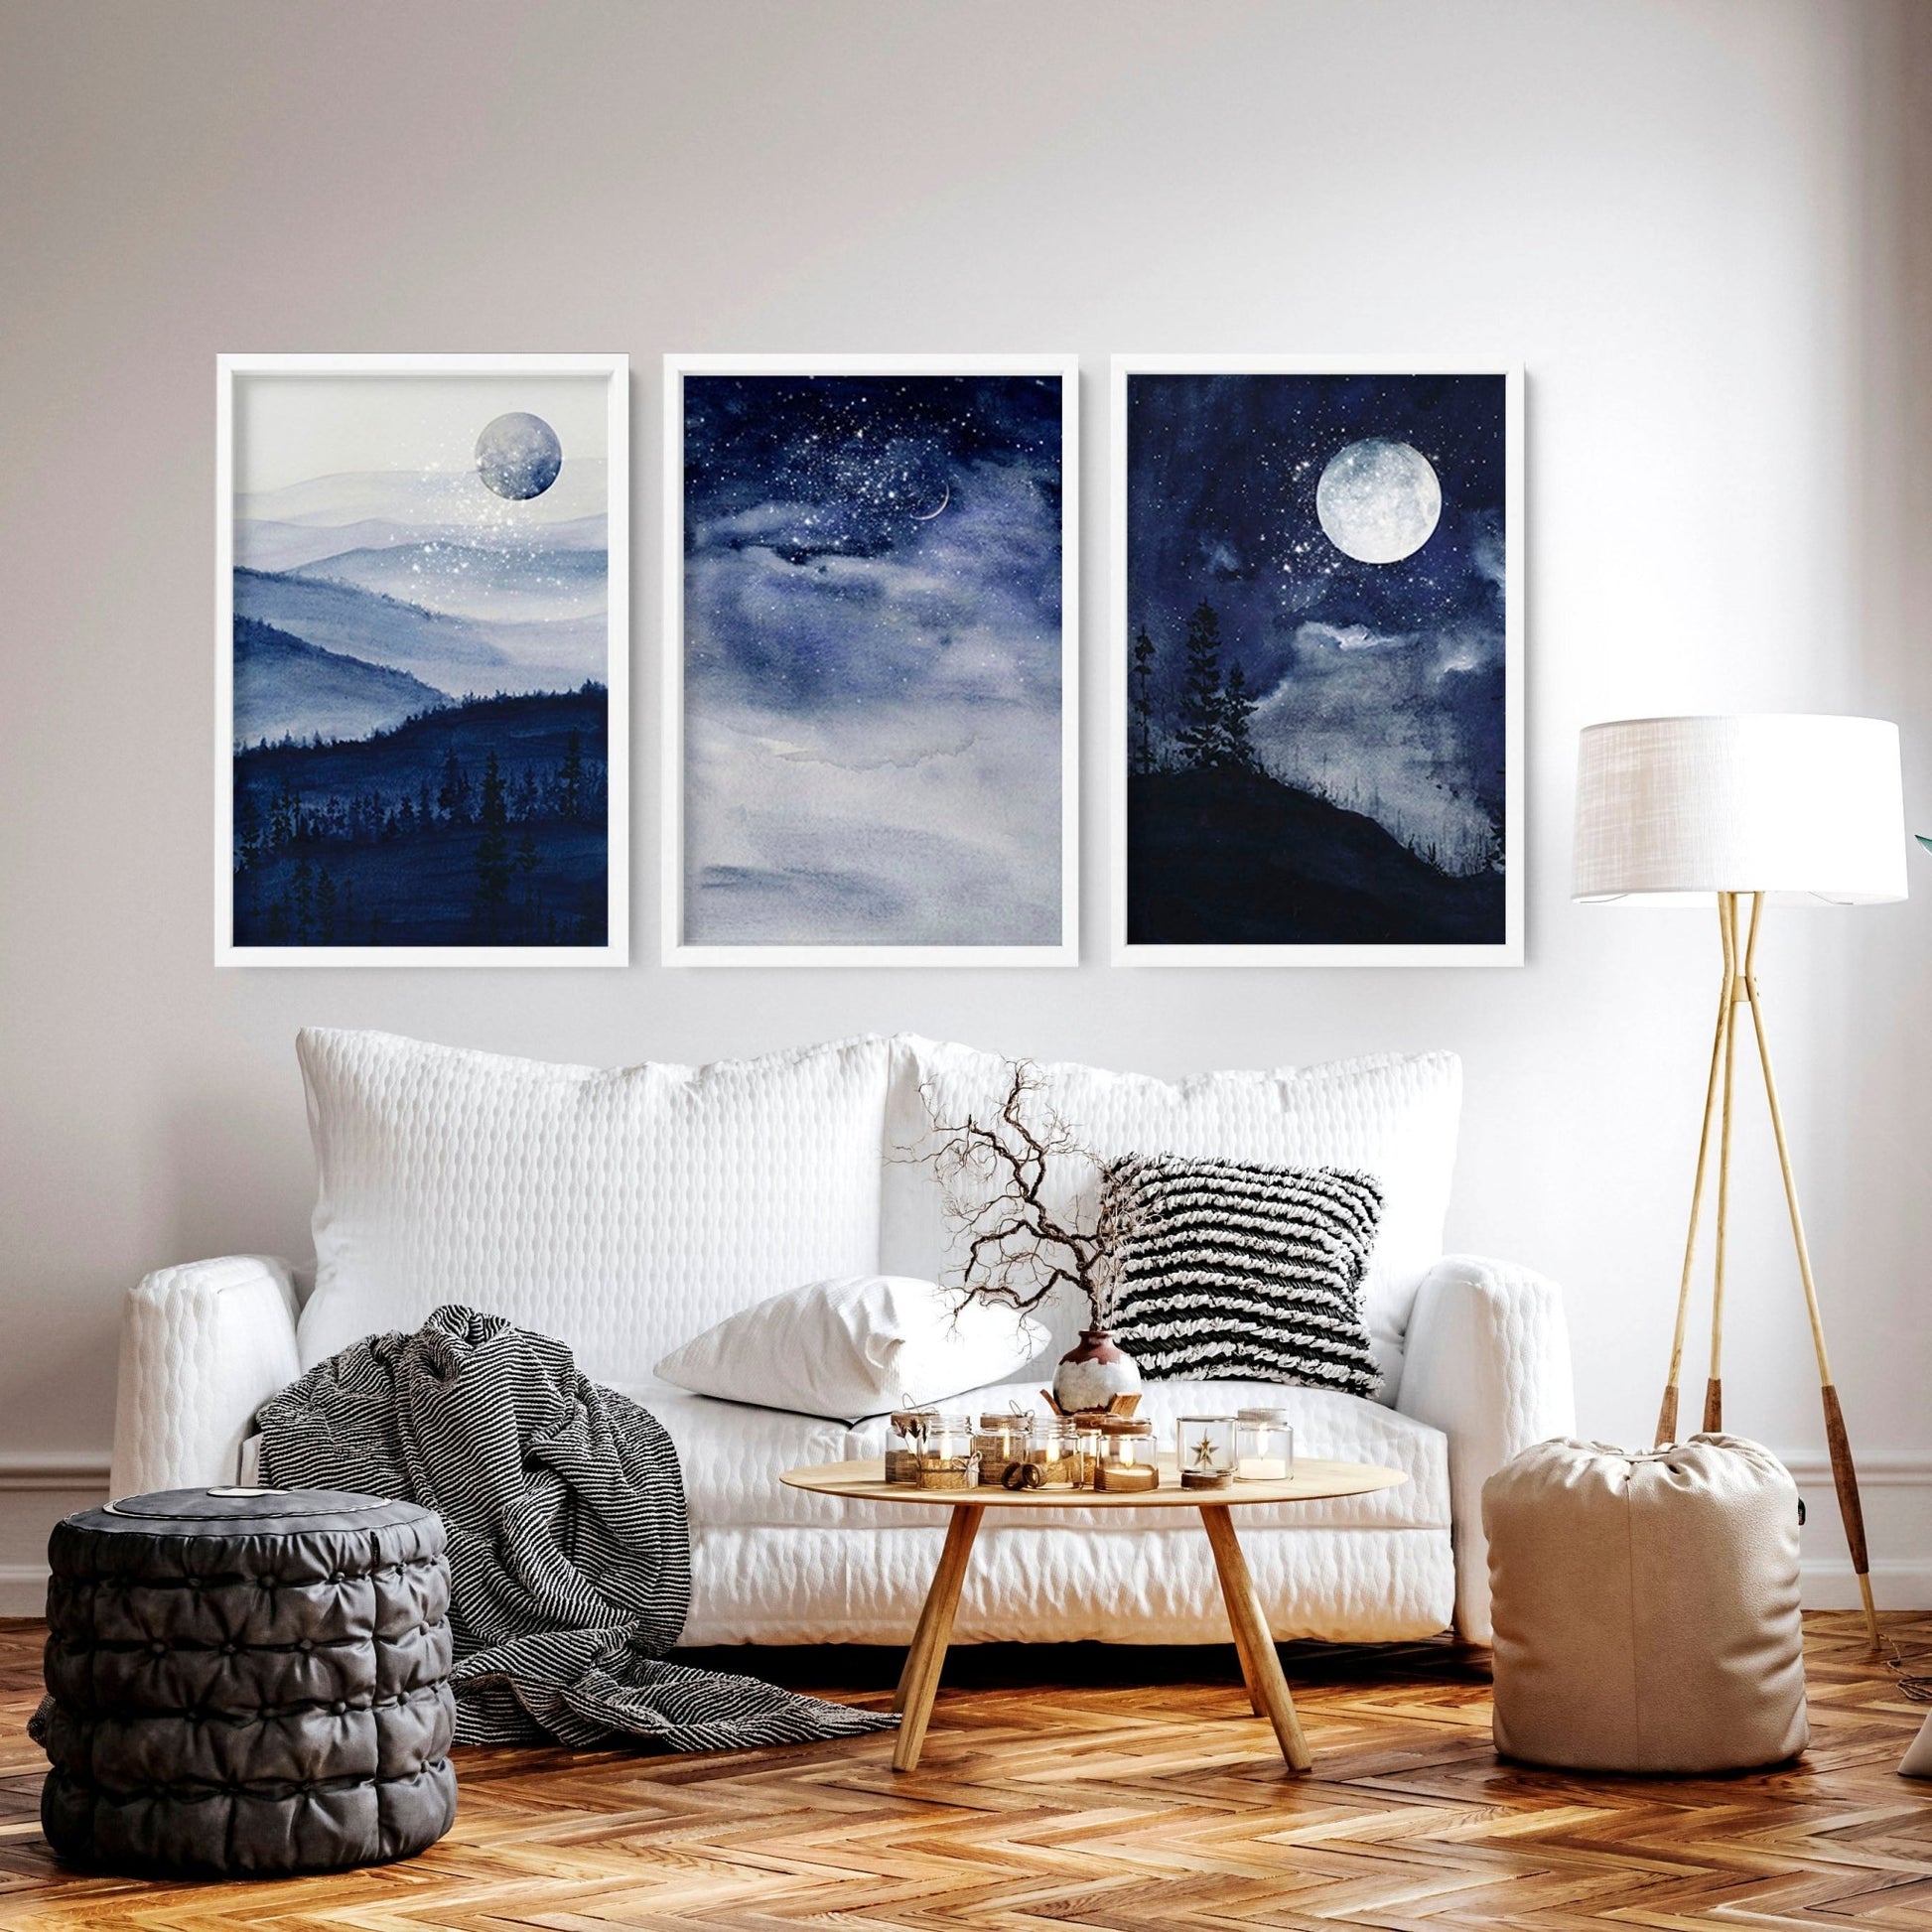 Night Sky Wall Art | set of 3 wall art prints - About Wall Art